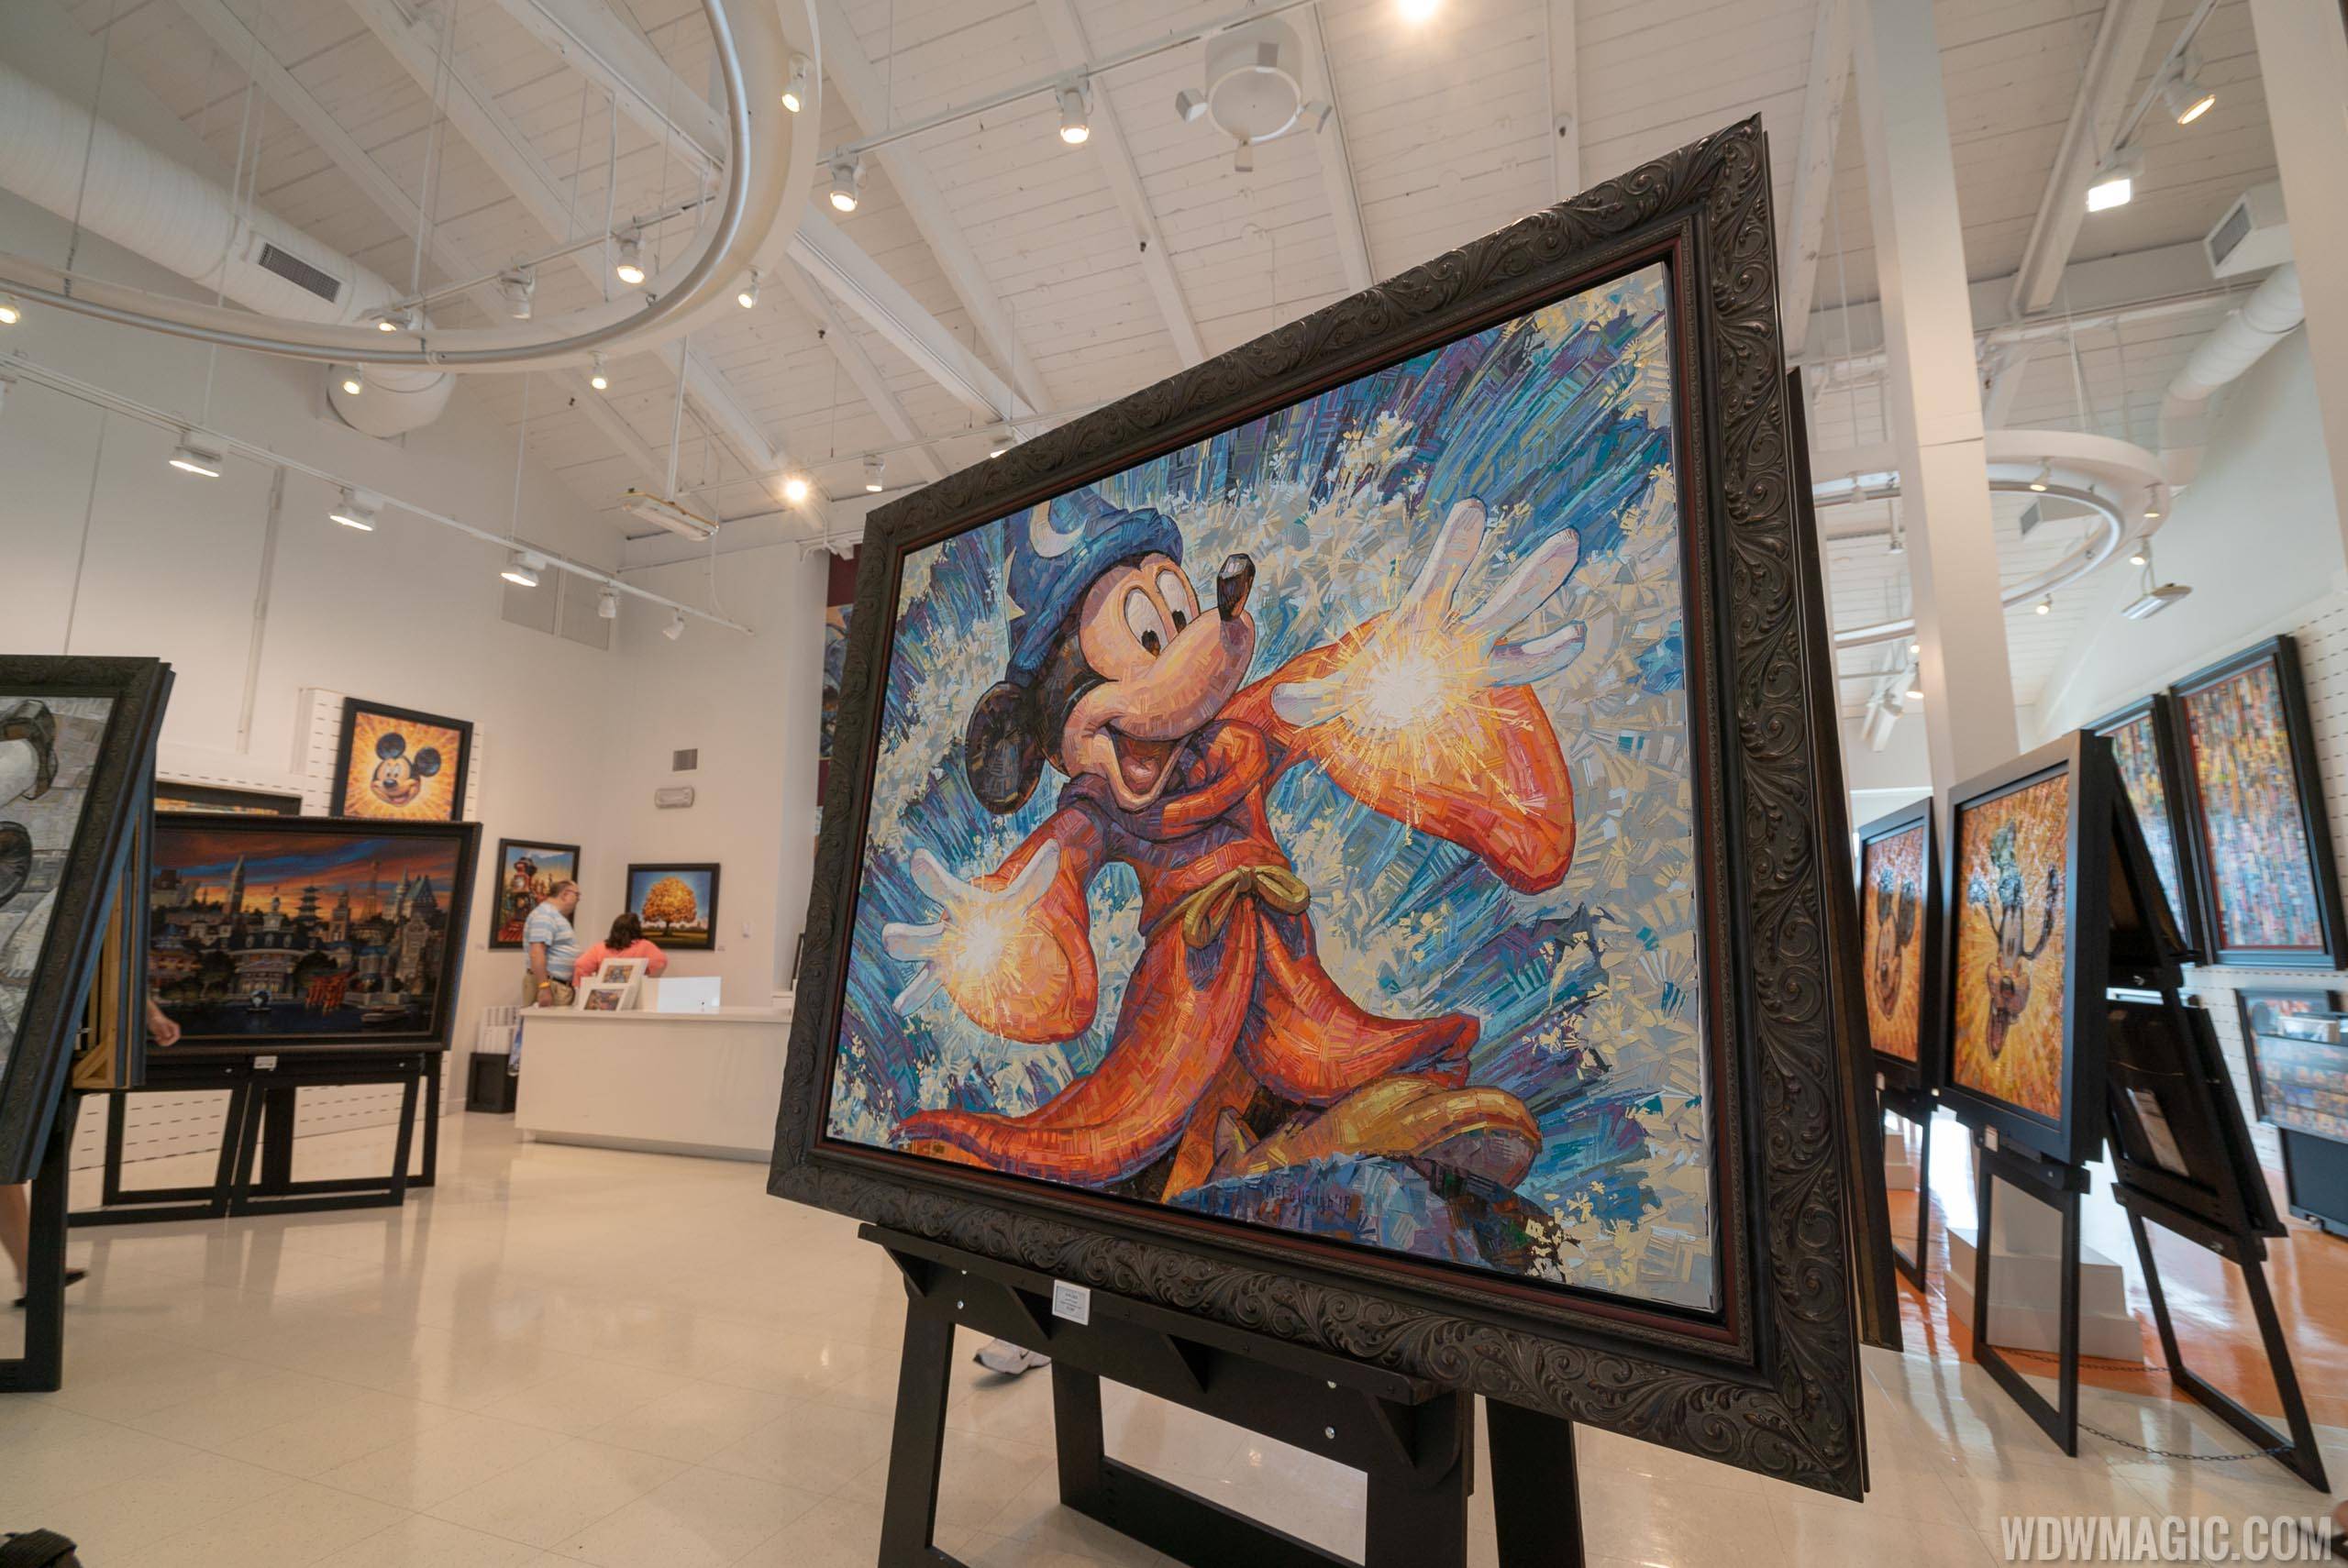 PHOTOS - The Art of Disney Presents Greg McCullough now open at Disney Springs